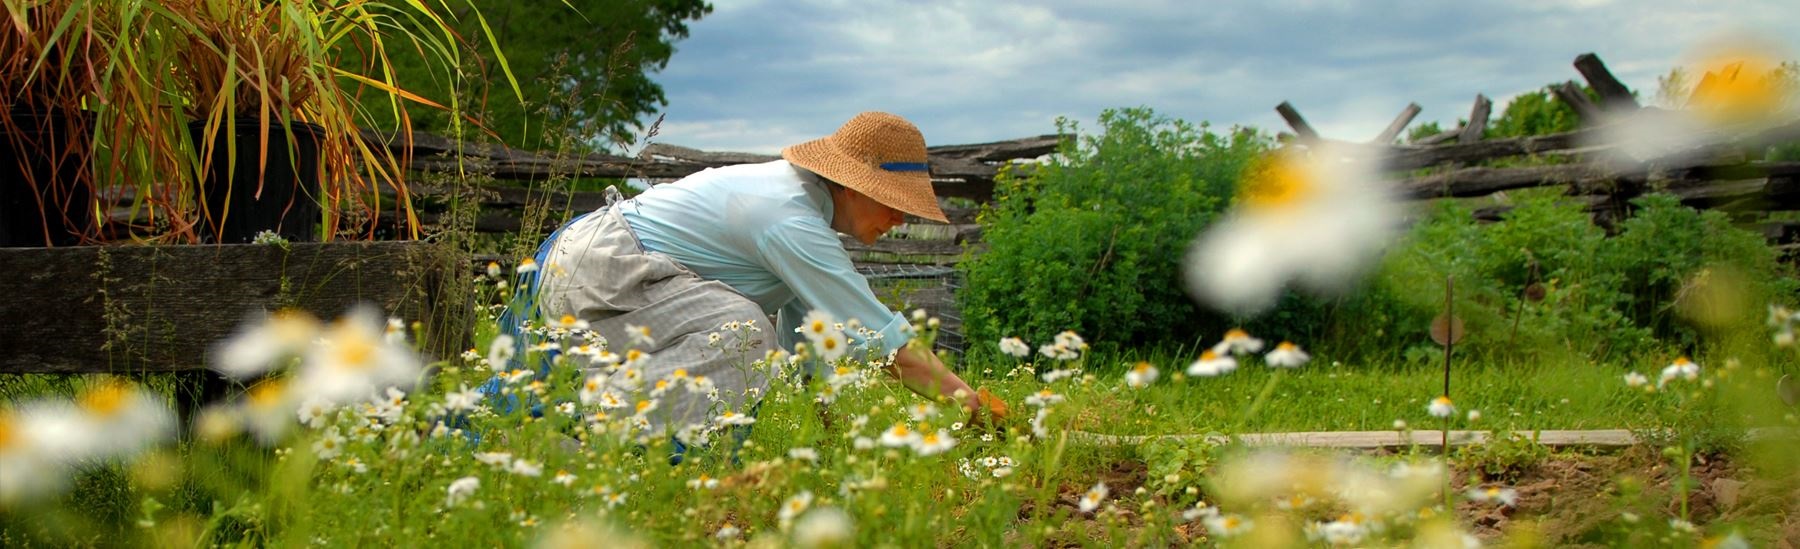 Woman tending to garden at historic Missouri town